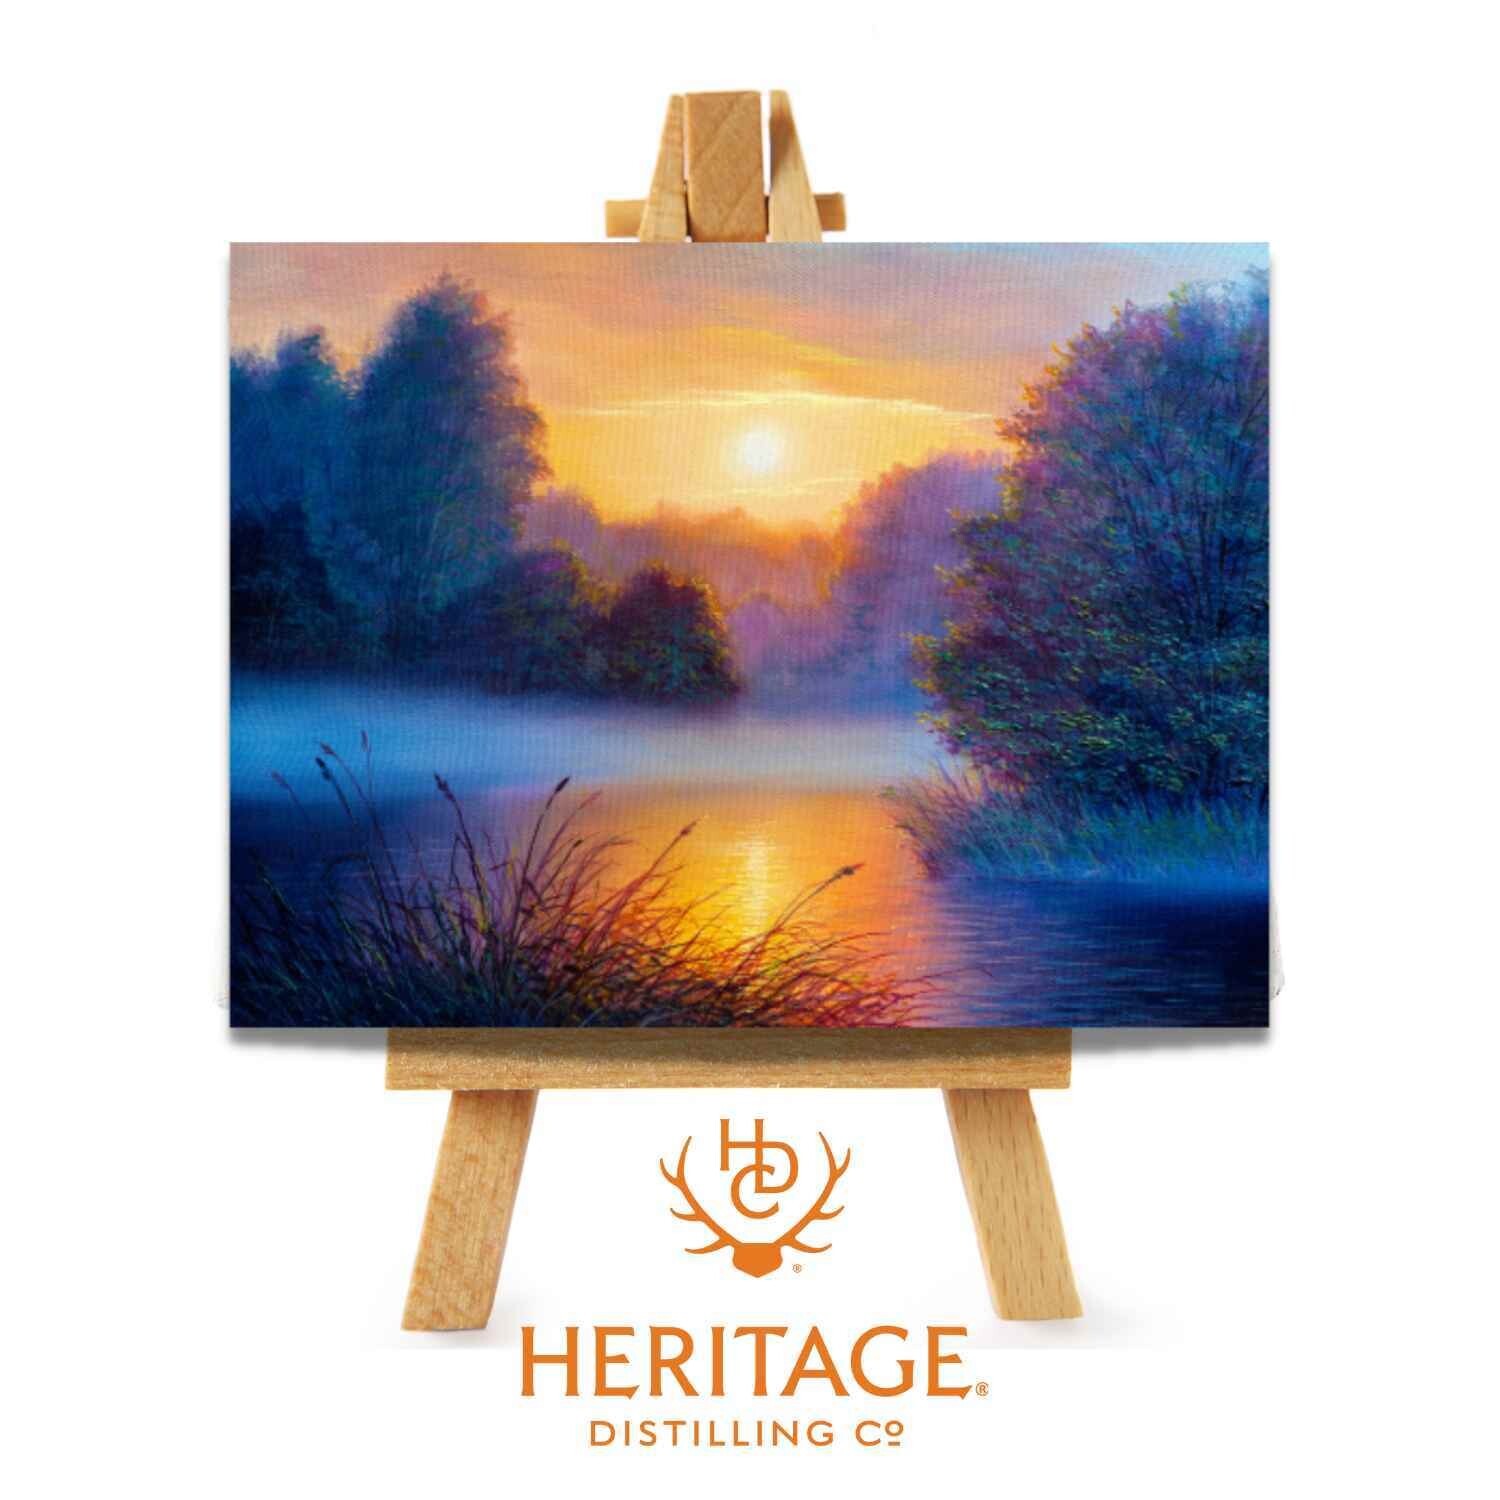 Paint and Taste at Heritage- Wed Nov 30 @ 5-7:30pm